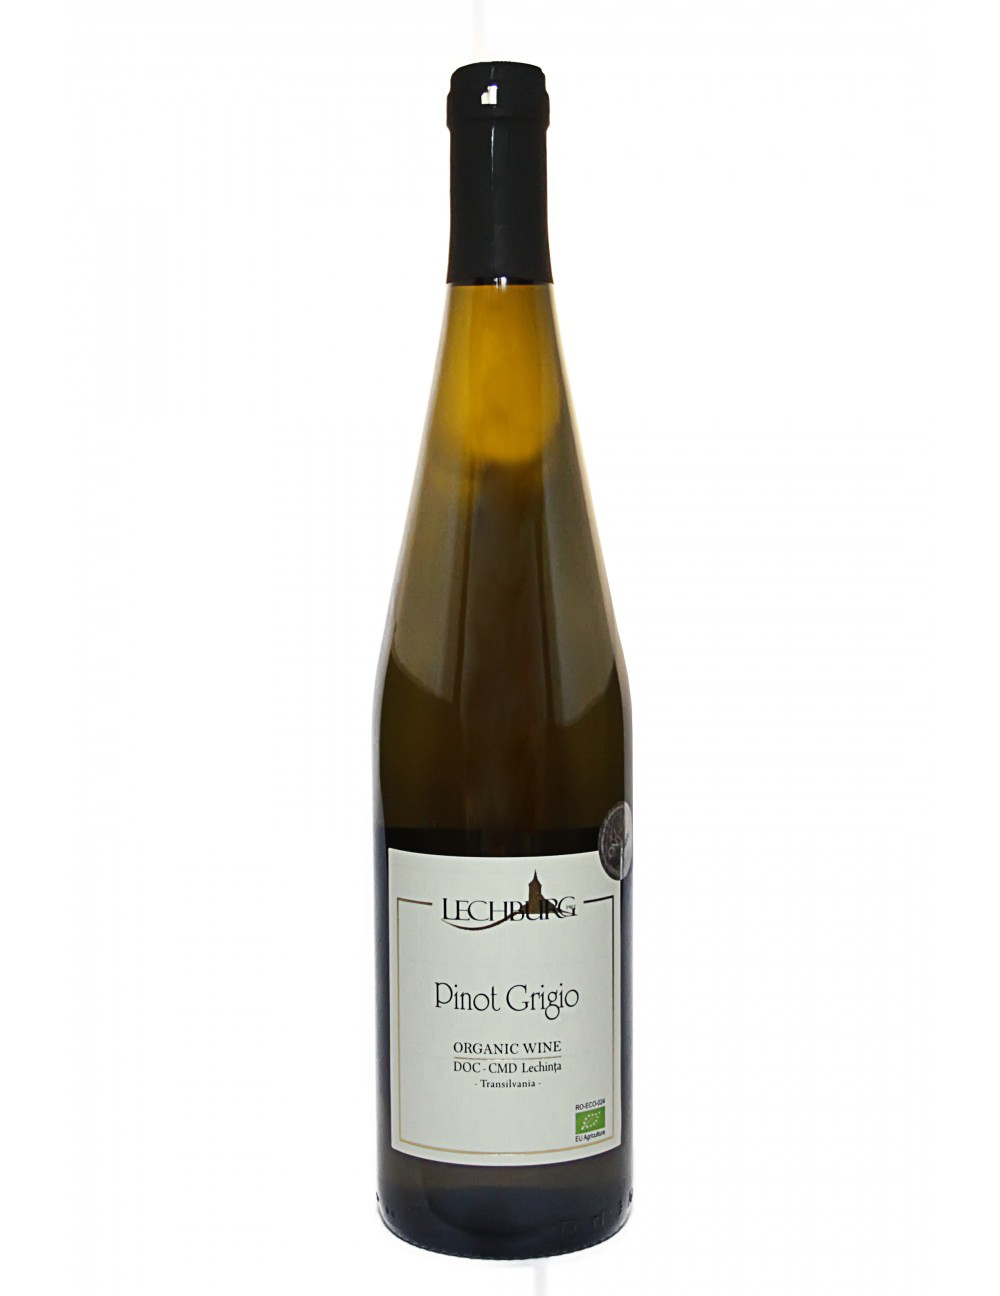 Vin alb - Lechinta / Lechburg, Pinot Grigio, ecologic, sec, 2016 | Lechburg